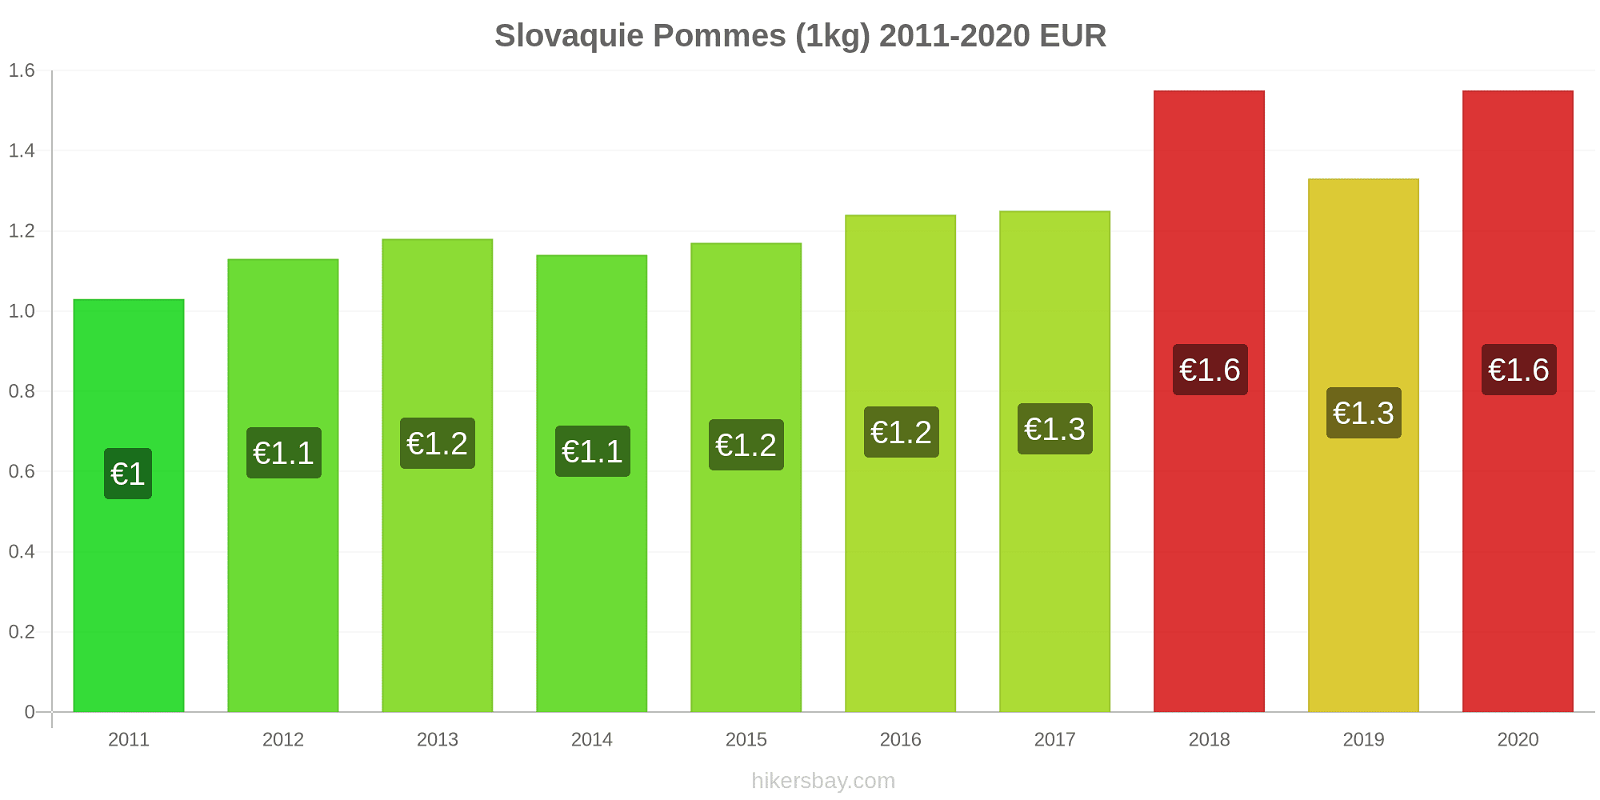 Slovaquie changements de prix Pommes (1kg) hikersbay.com